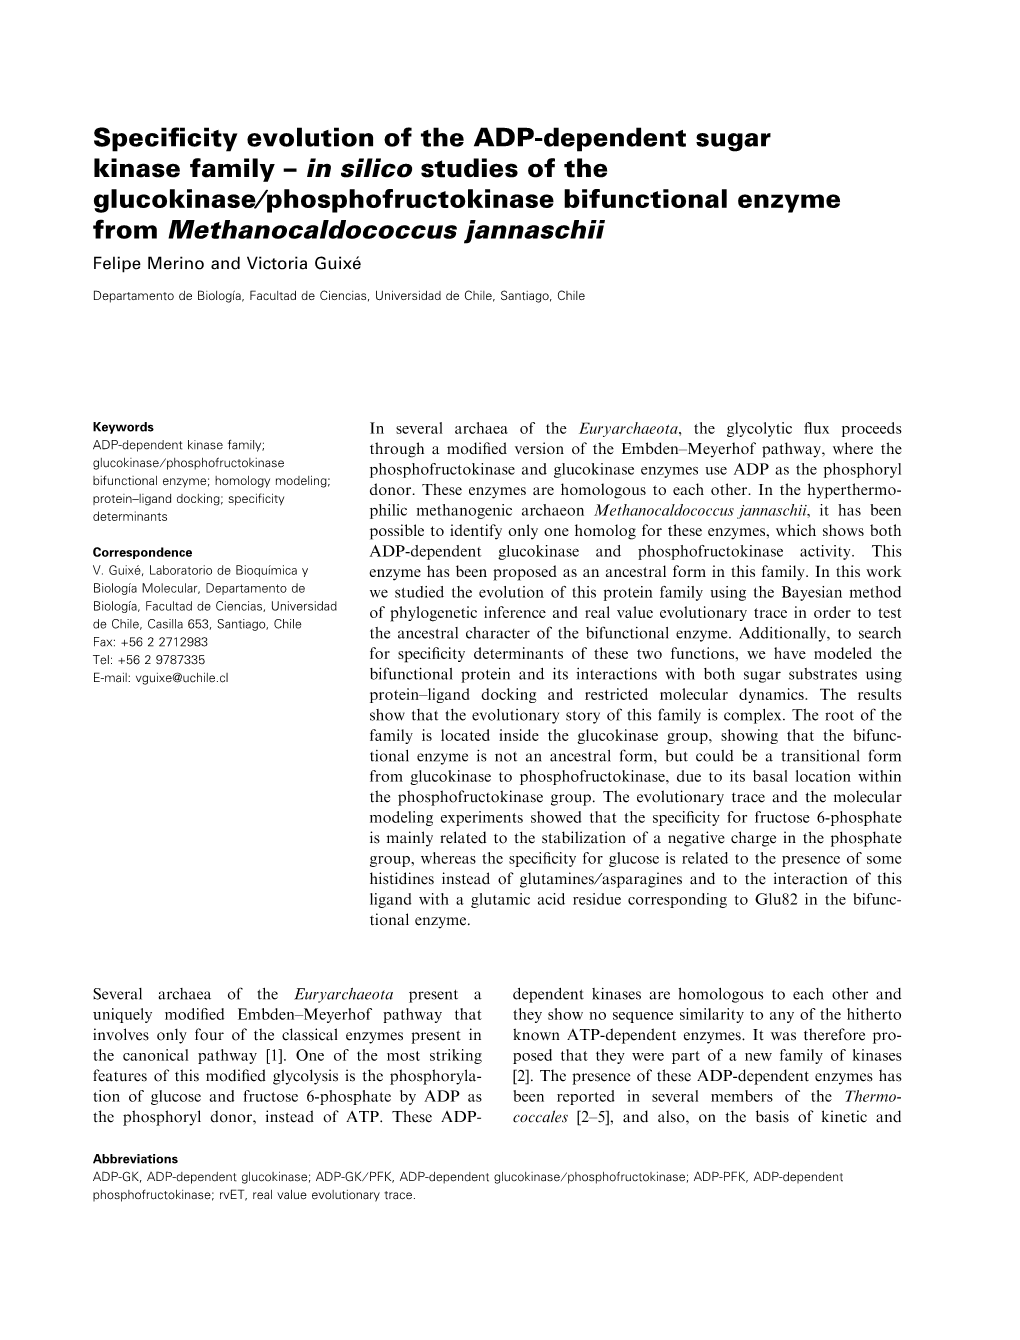 Specificity Evolution of the ADP-Dependent Sugar Kinase